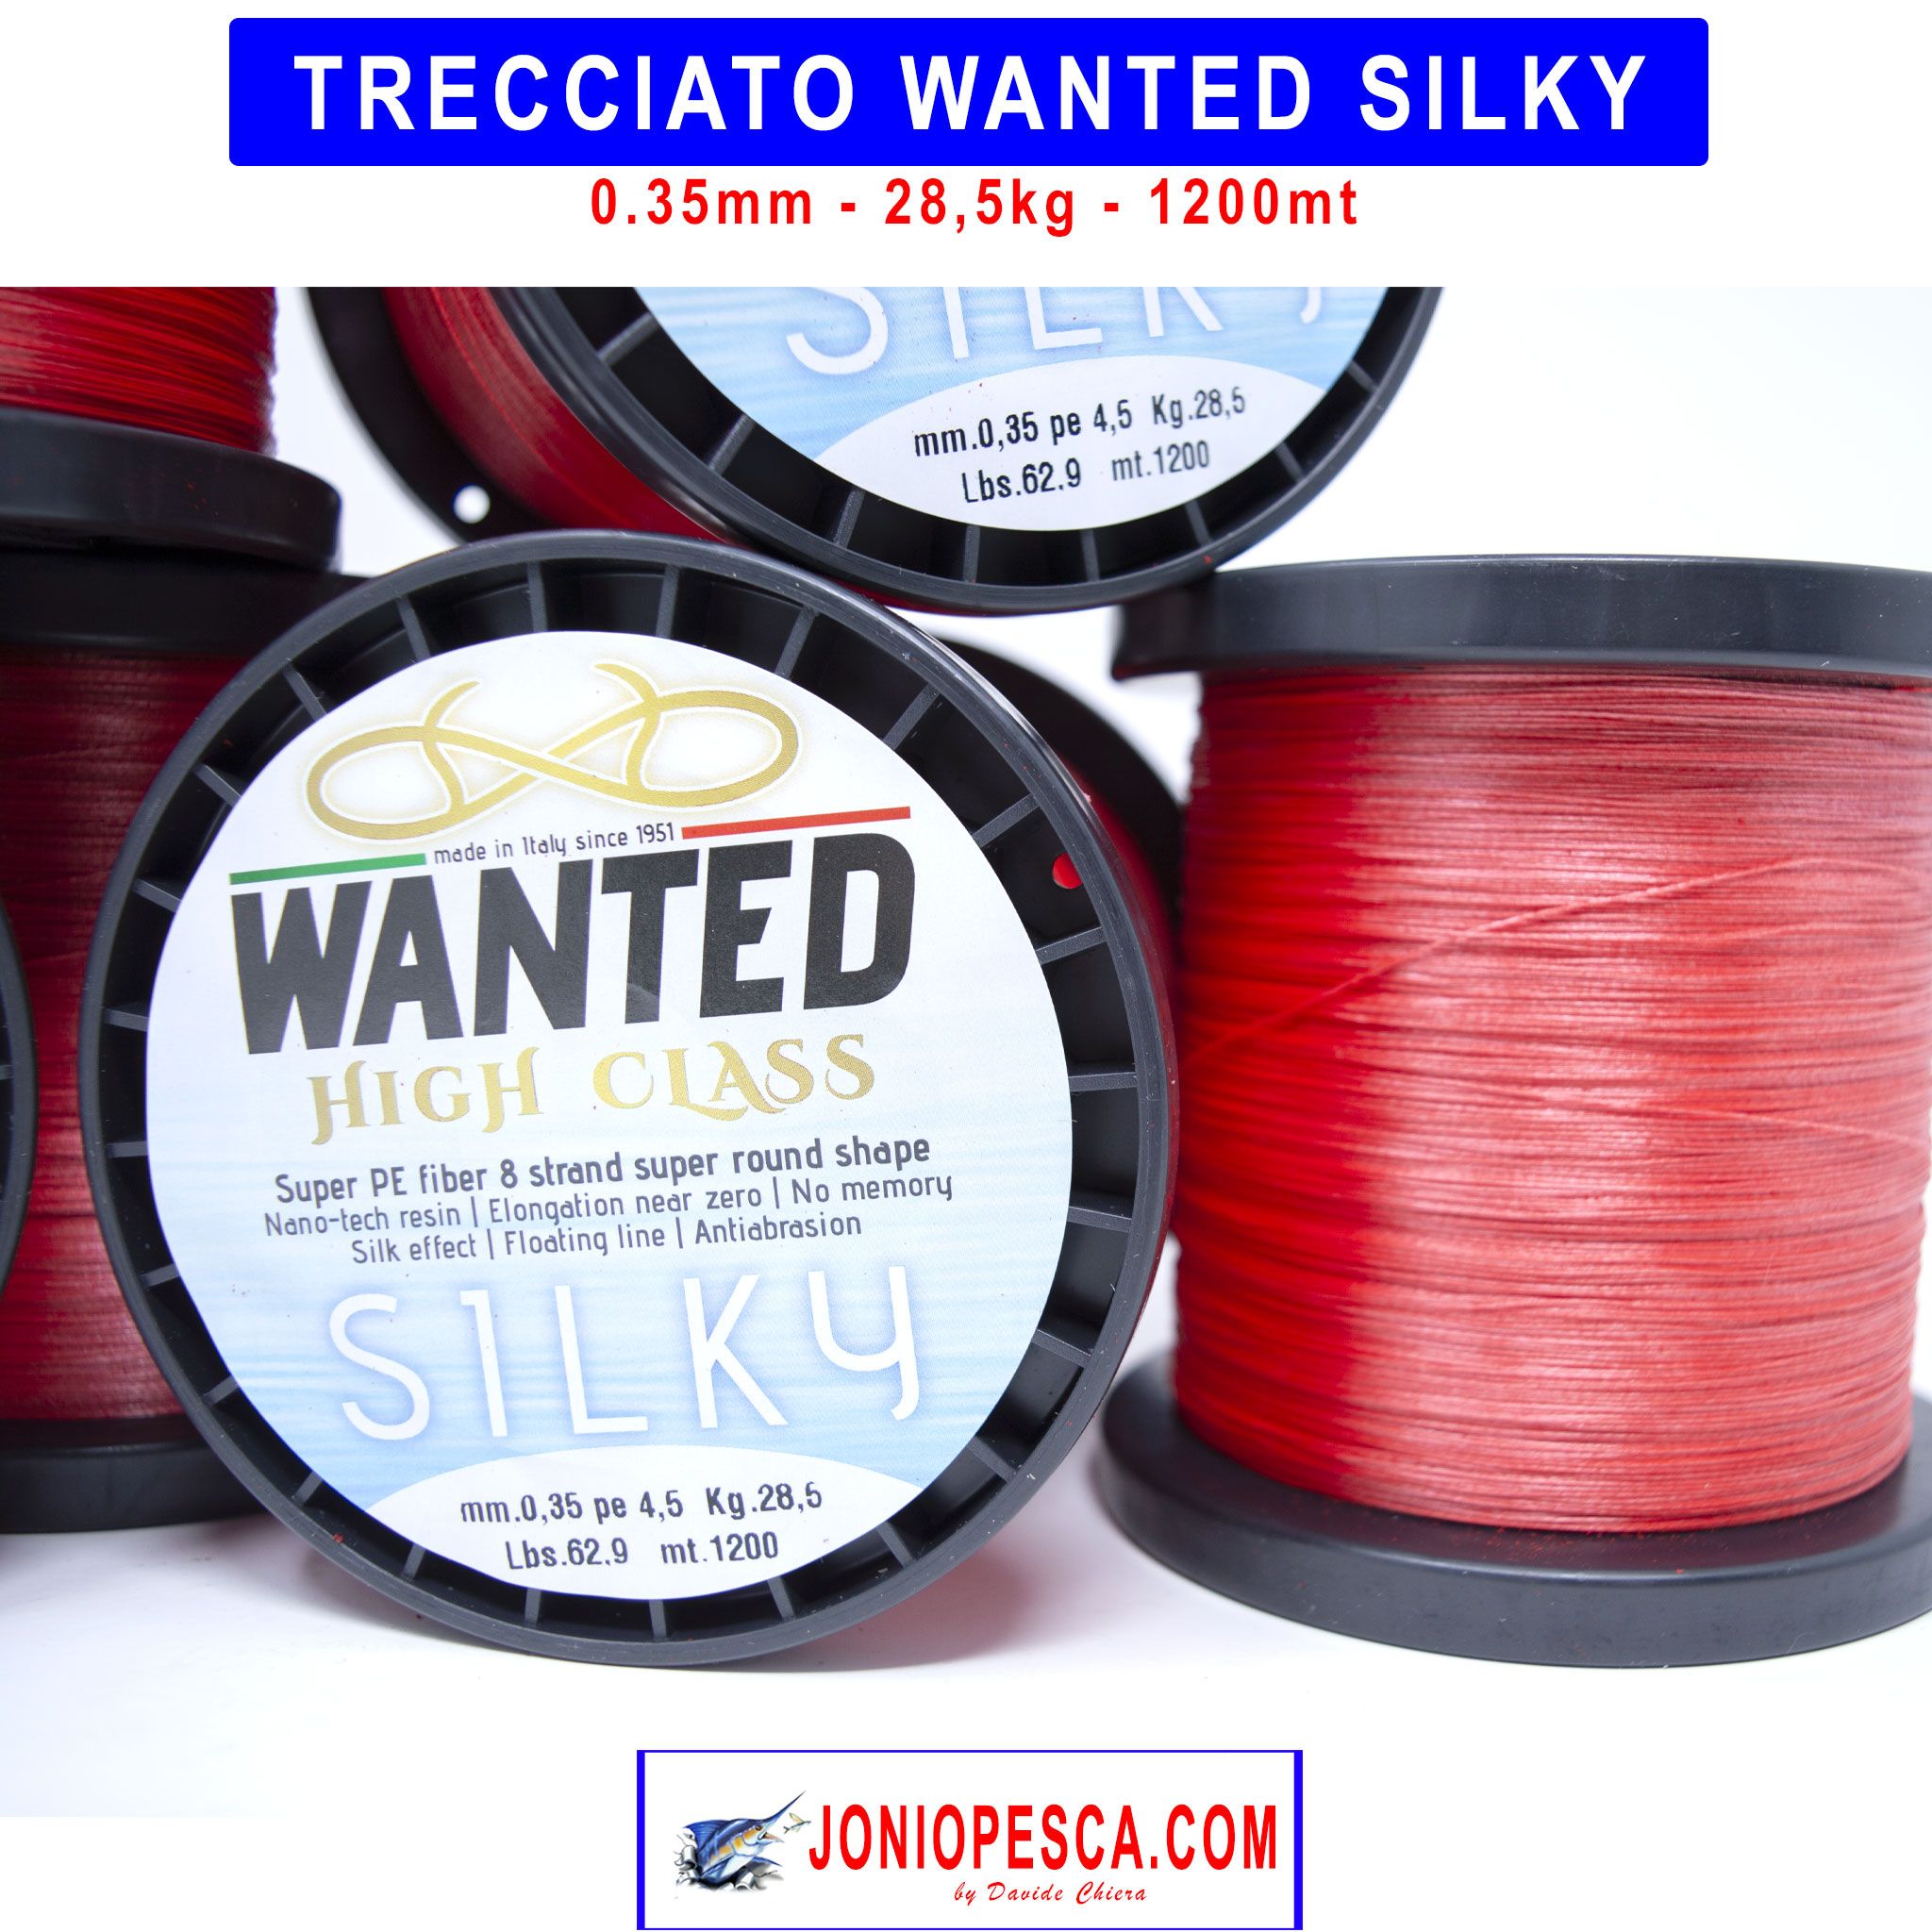 trecciato-wanted-silky-1200mt-3